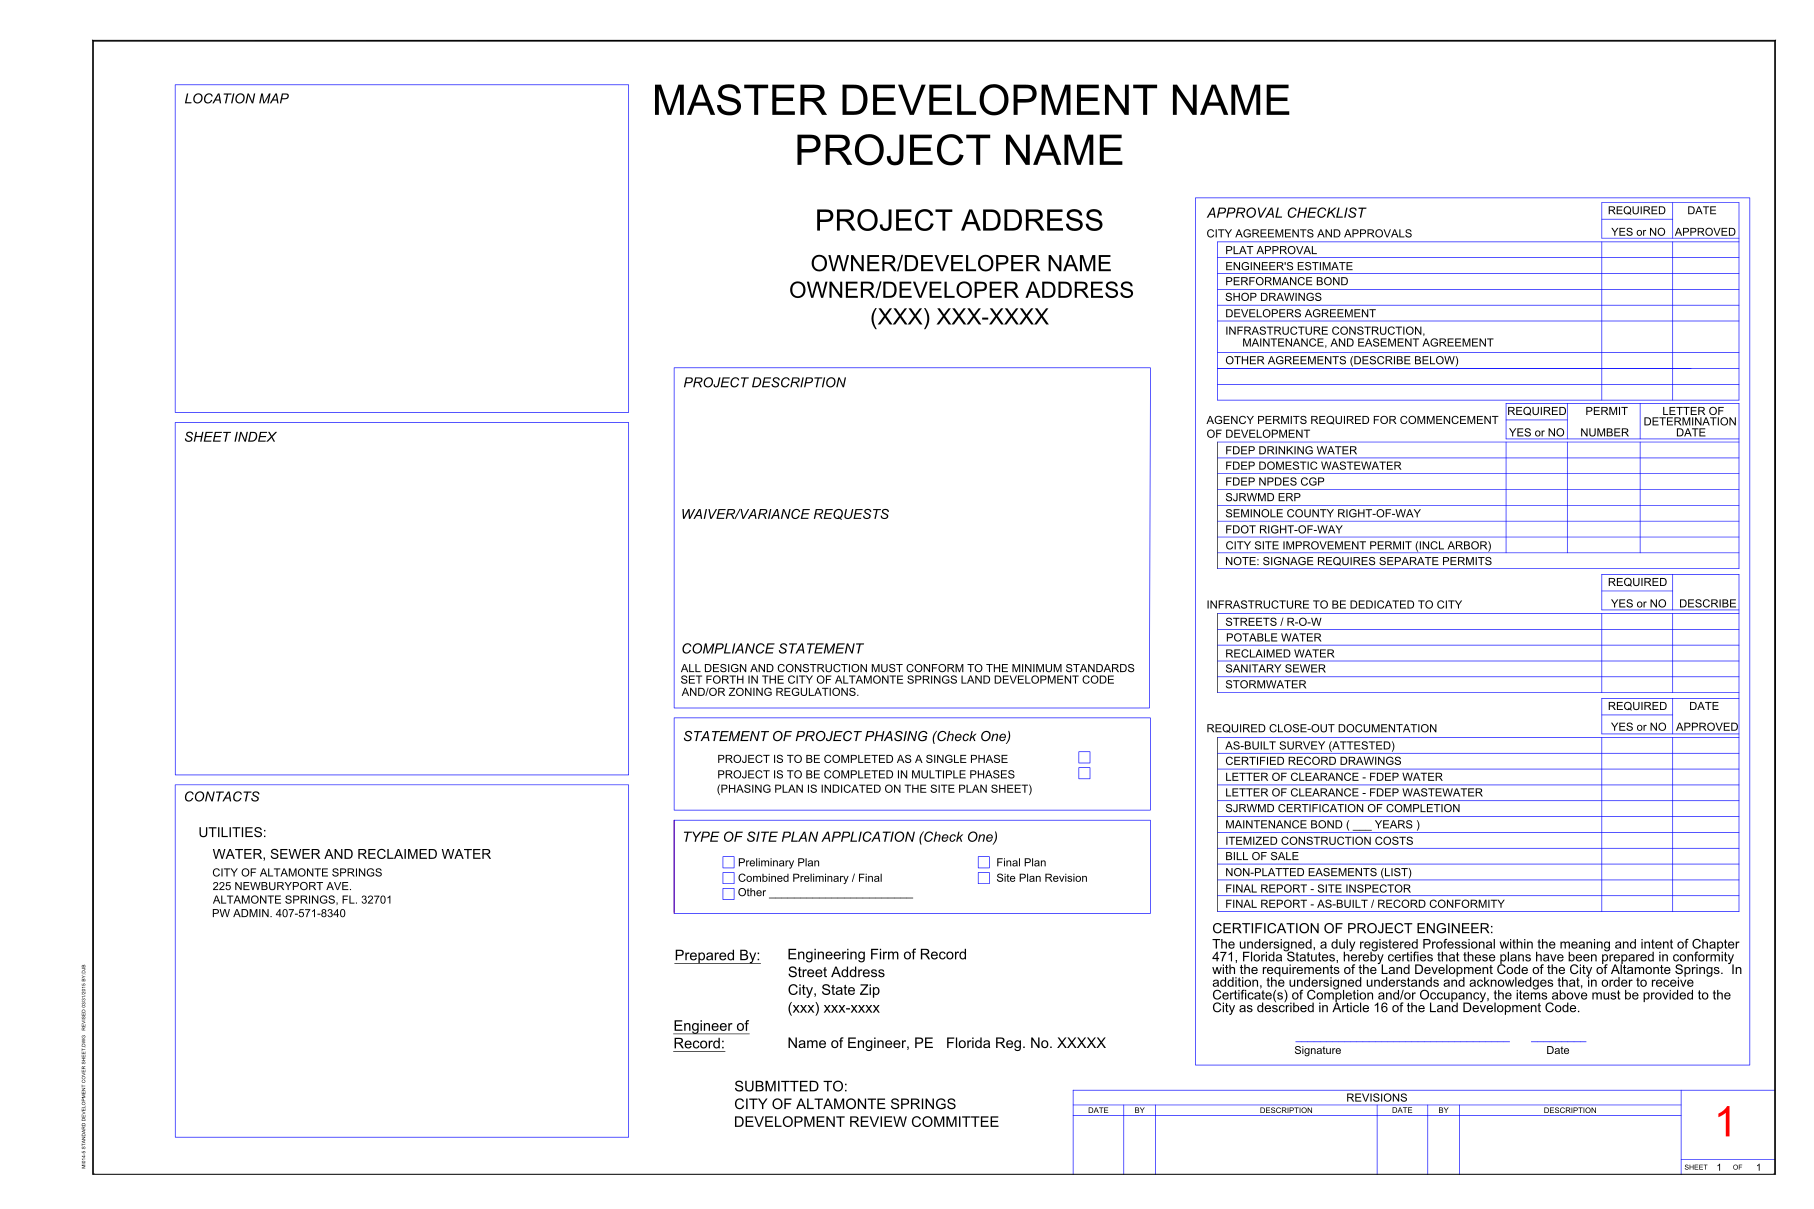 264488196-master-development-name-project-name-altamonte